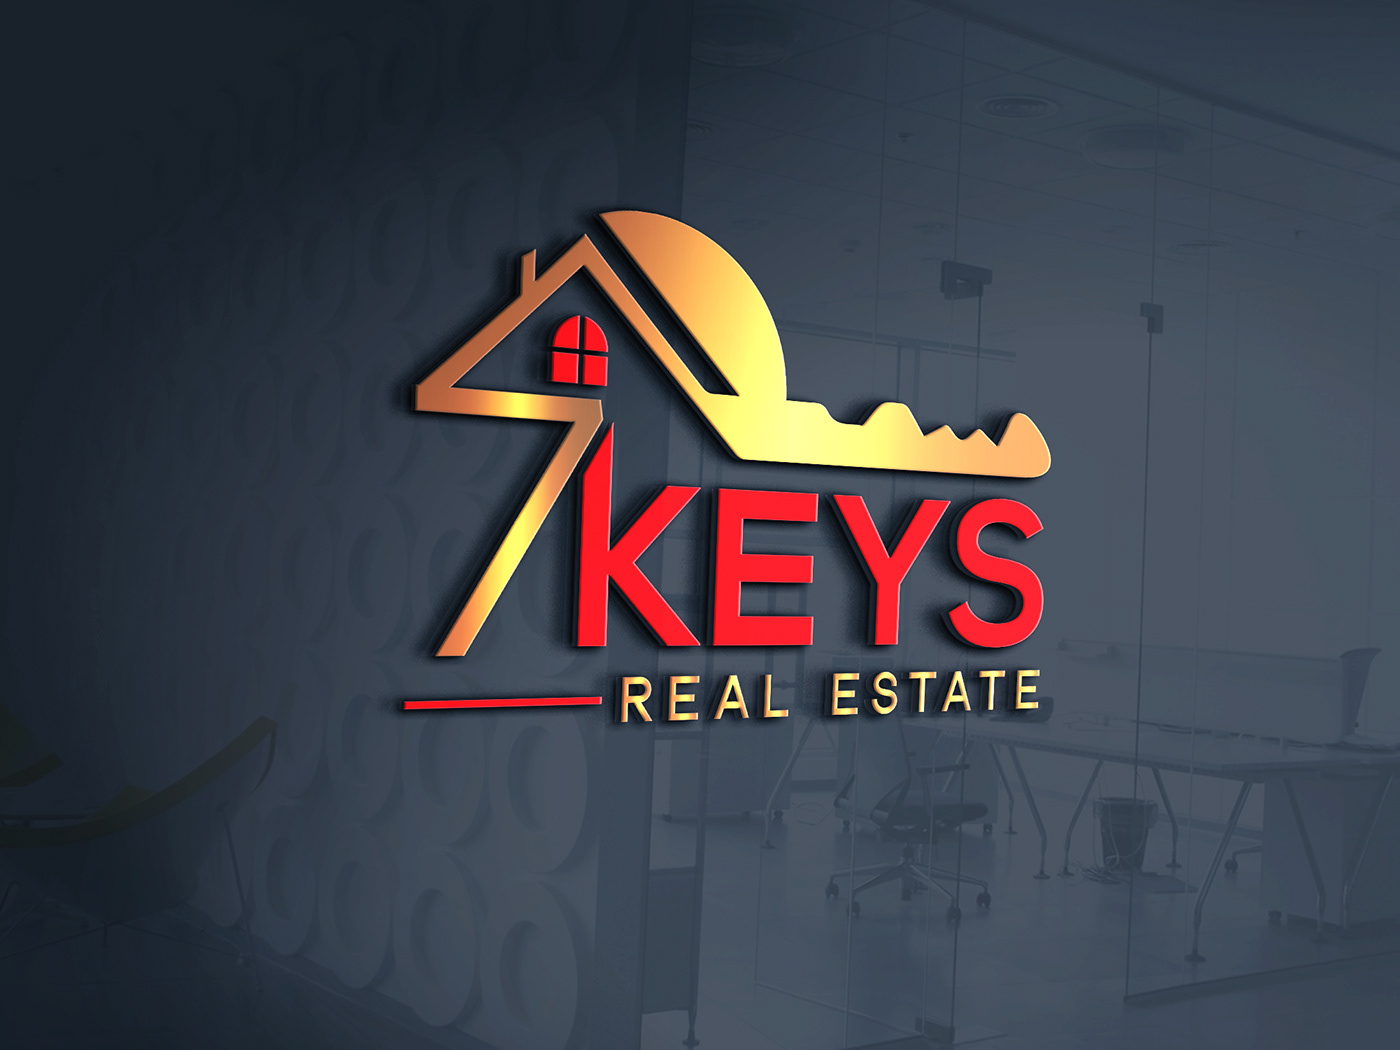 text logo real estate Logo Design Graphic Designer 𝖠𝖽𝗈𝖻𝖾 𝖨𝗅𝗅𝗎𝗌𝗍𝗋𝖺𝗍𝗈𝗋 broker realtor Real estate logo construction